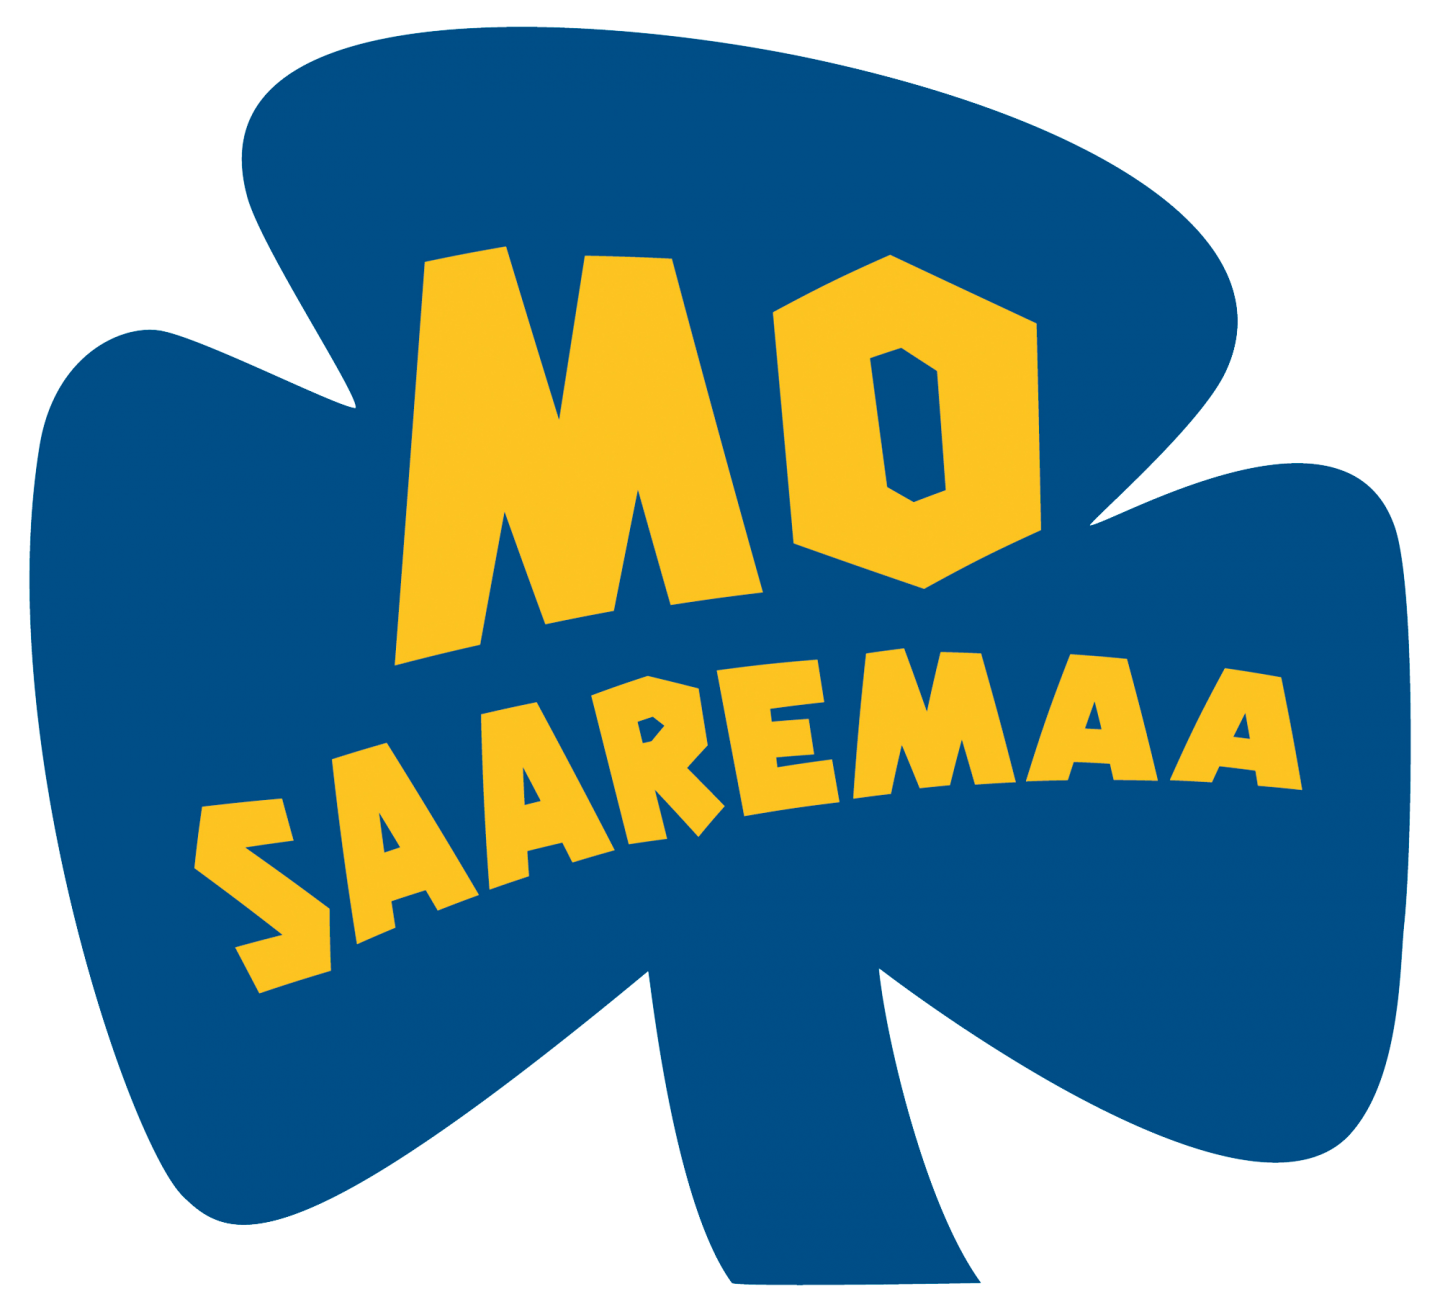 Saaremaa dating